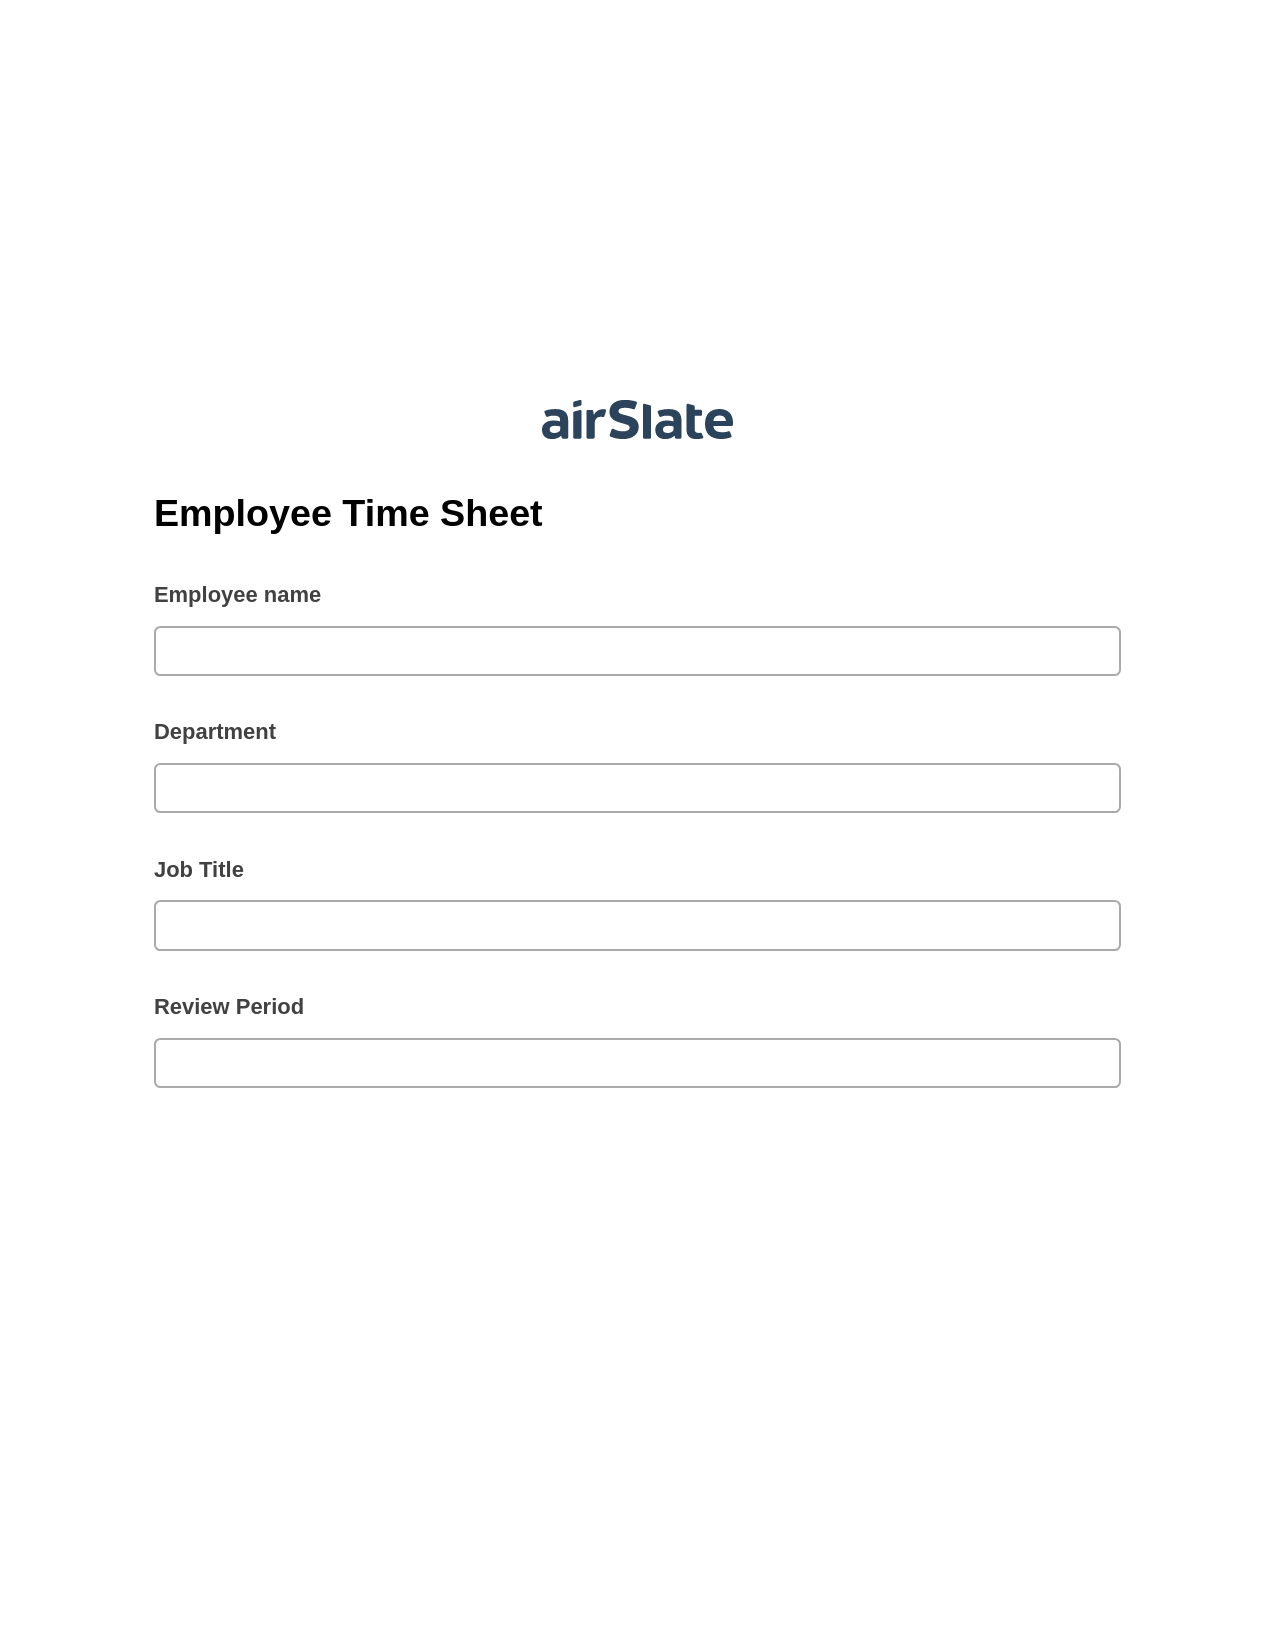 Employee Time Sheet Pre-fill Document Bot, Update Audit Trail Bot, Post-finish Document Bot